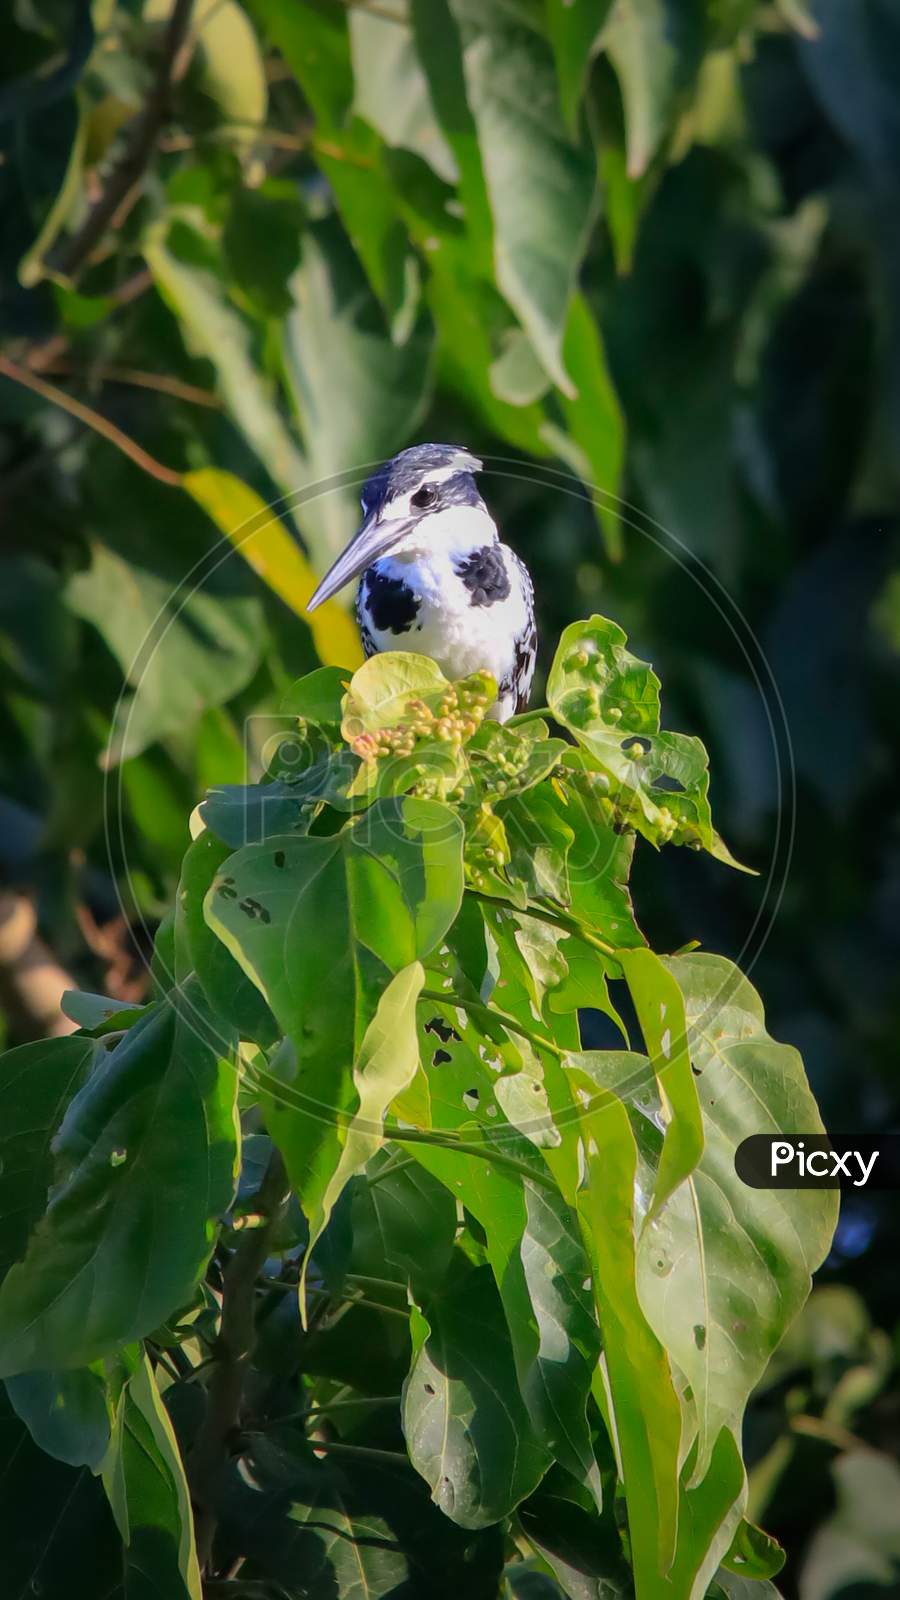 Pied kingfisher